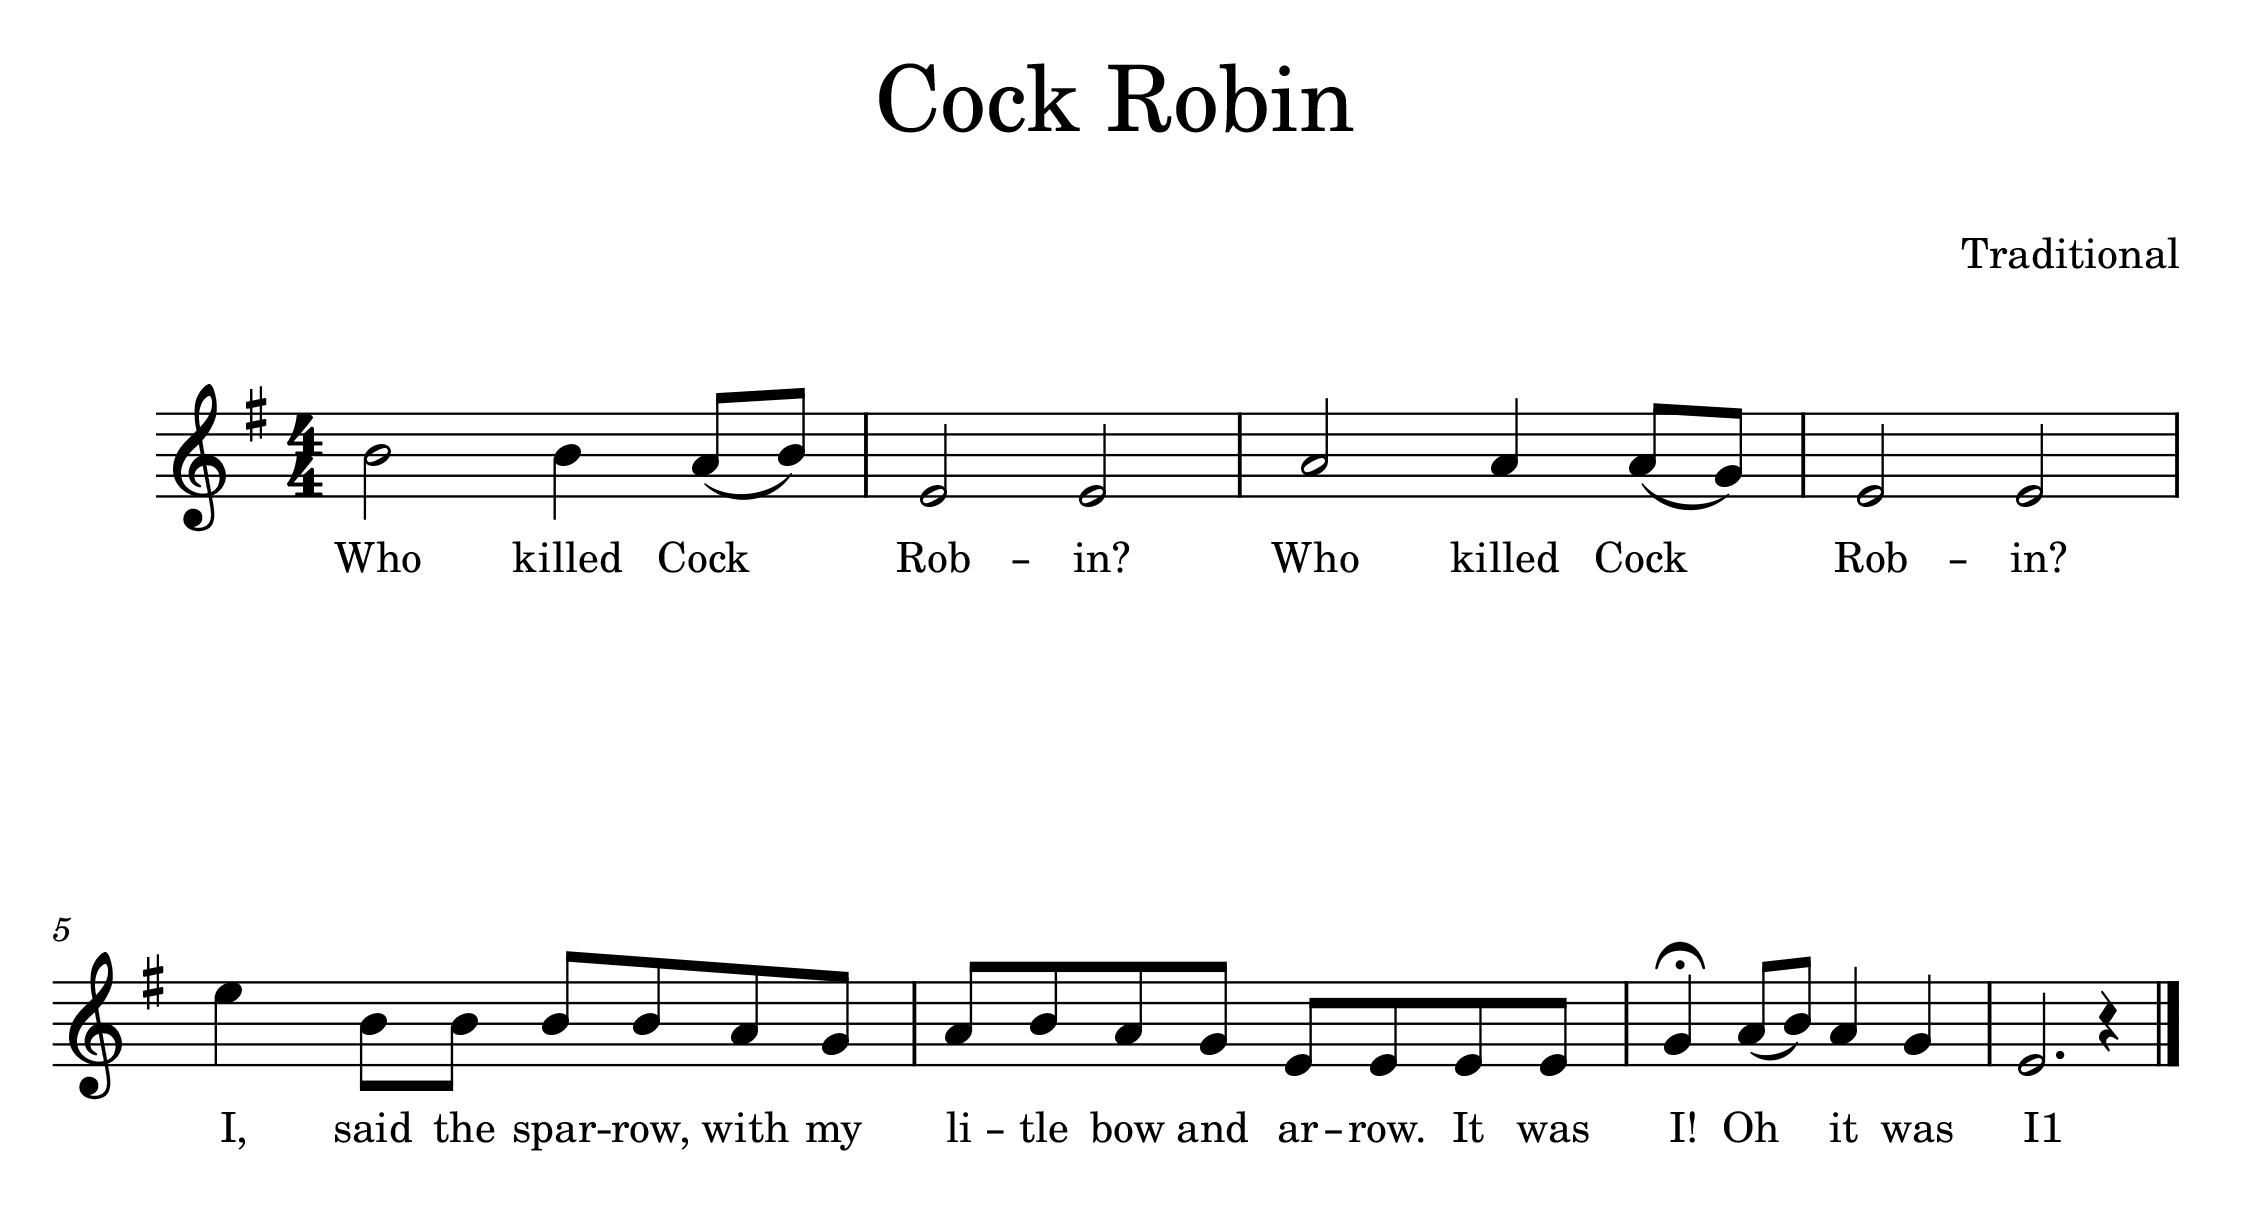 Sheet music for "Cock Robin"